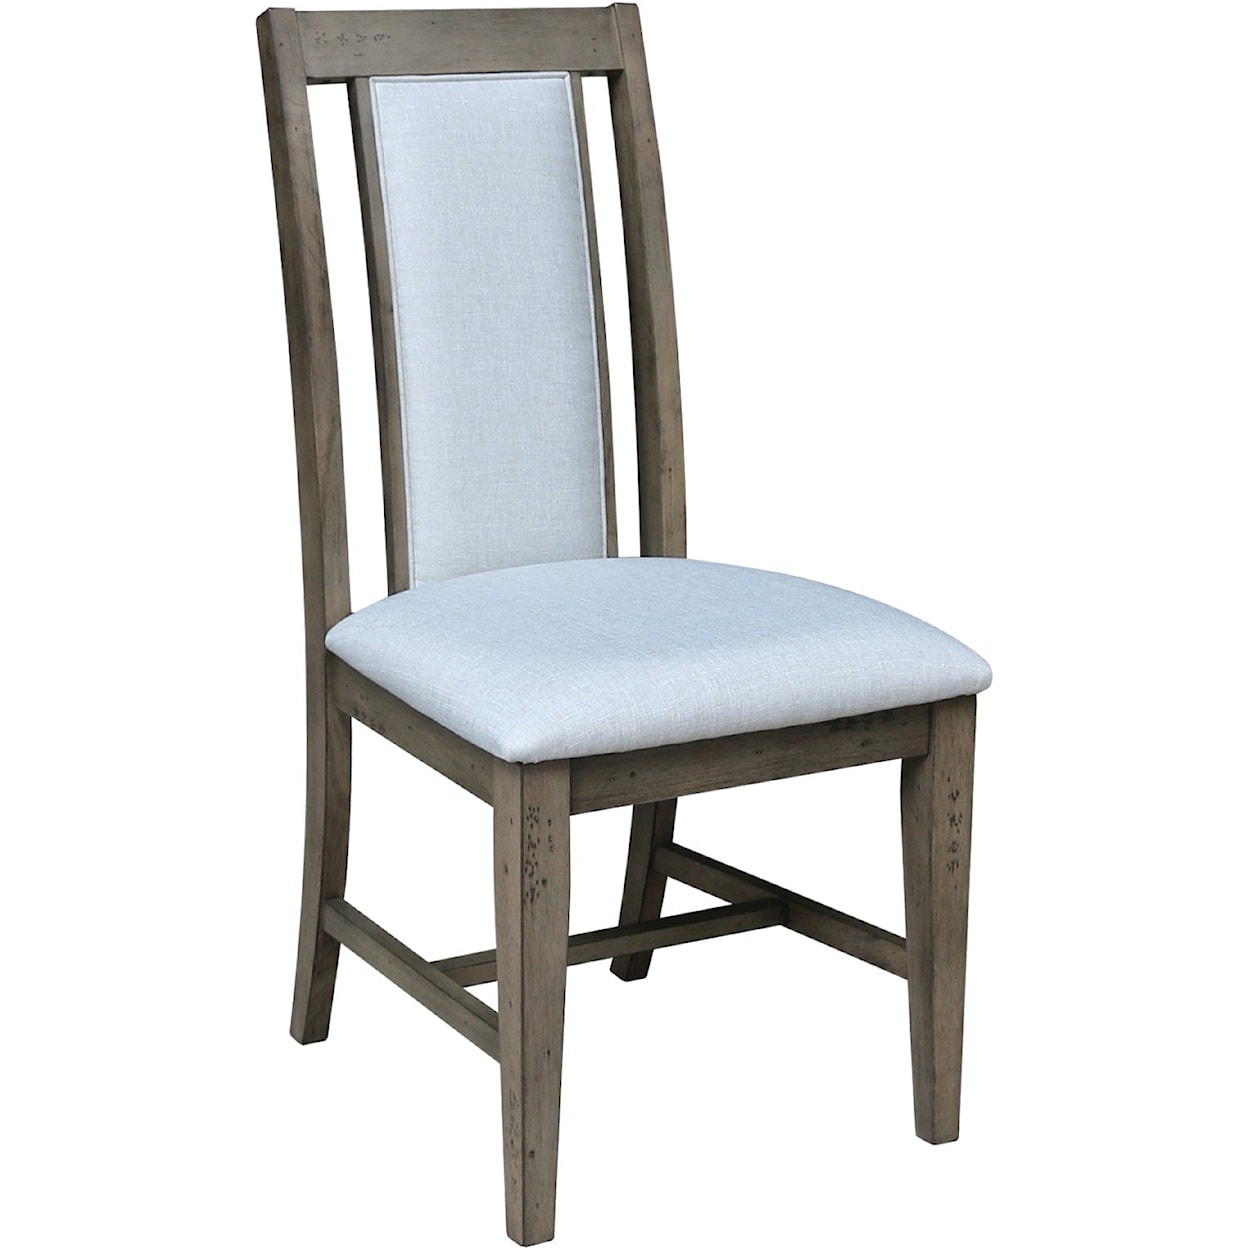 John Thomas Farmhouse Chic Upholstered Dining Chair